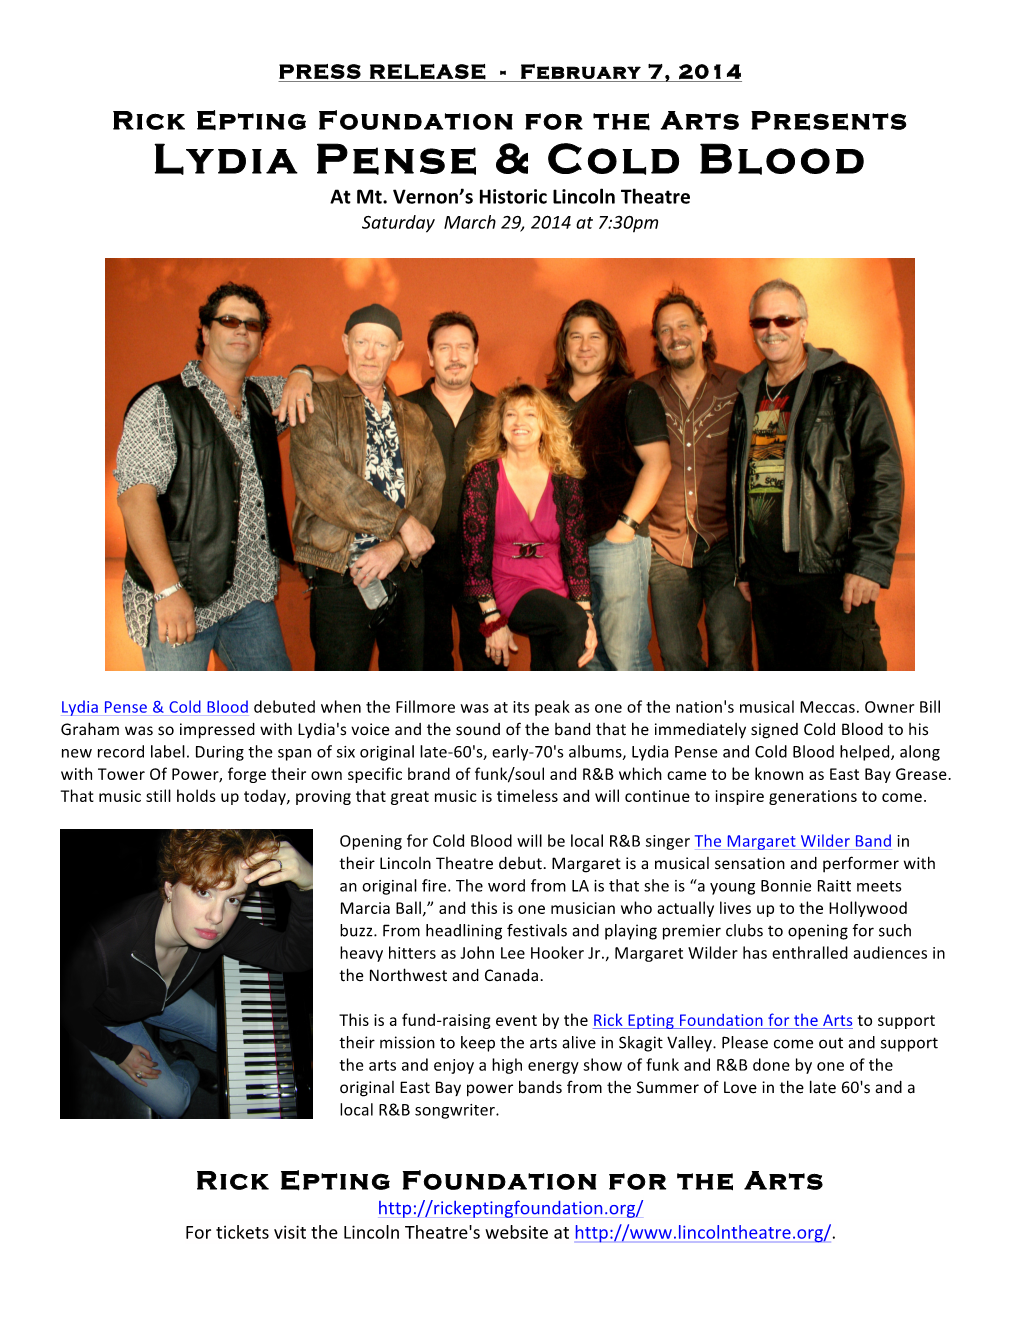 Lydia Pense & Cold Blood